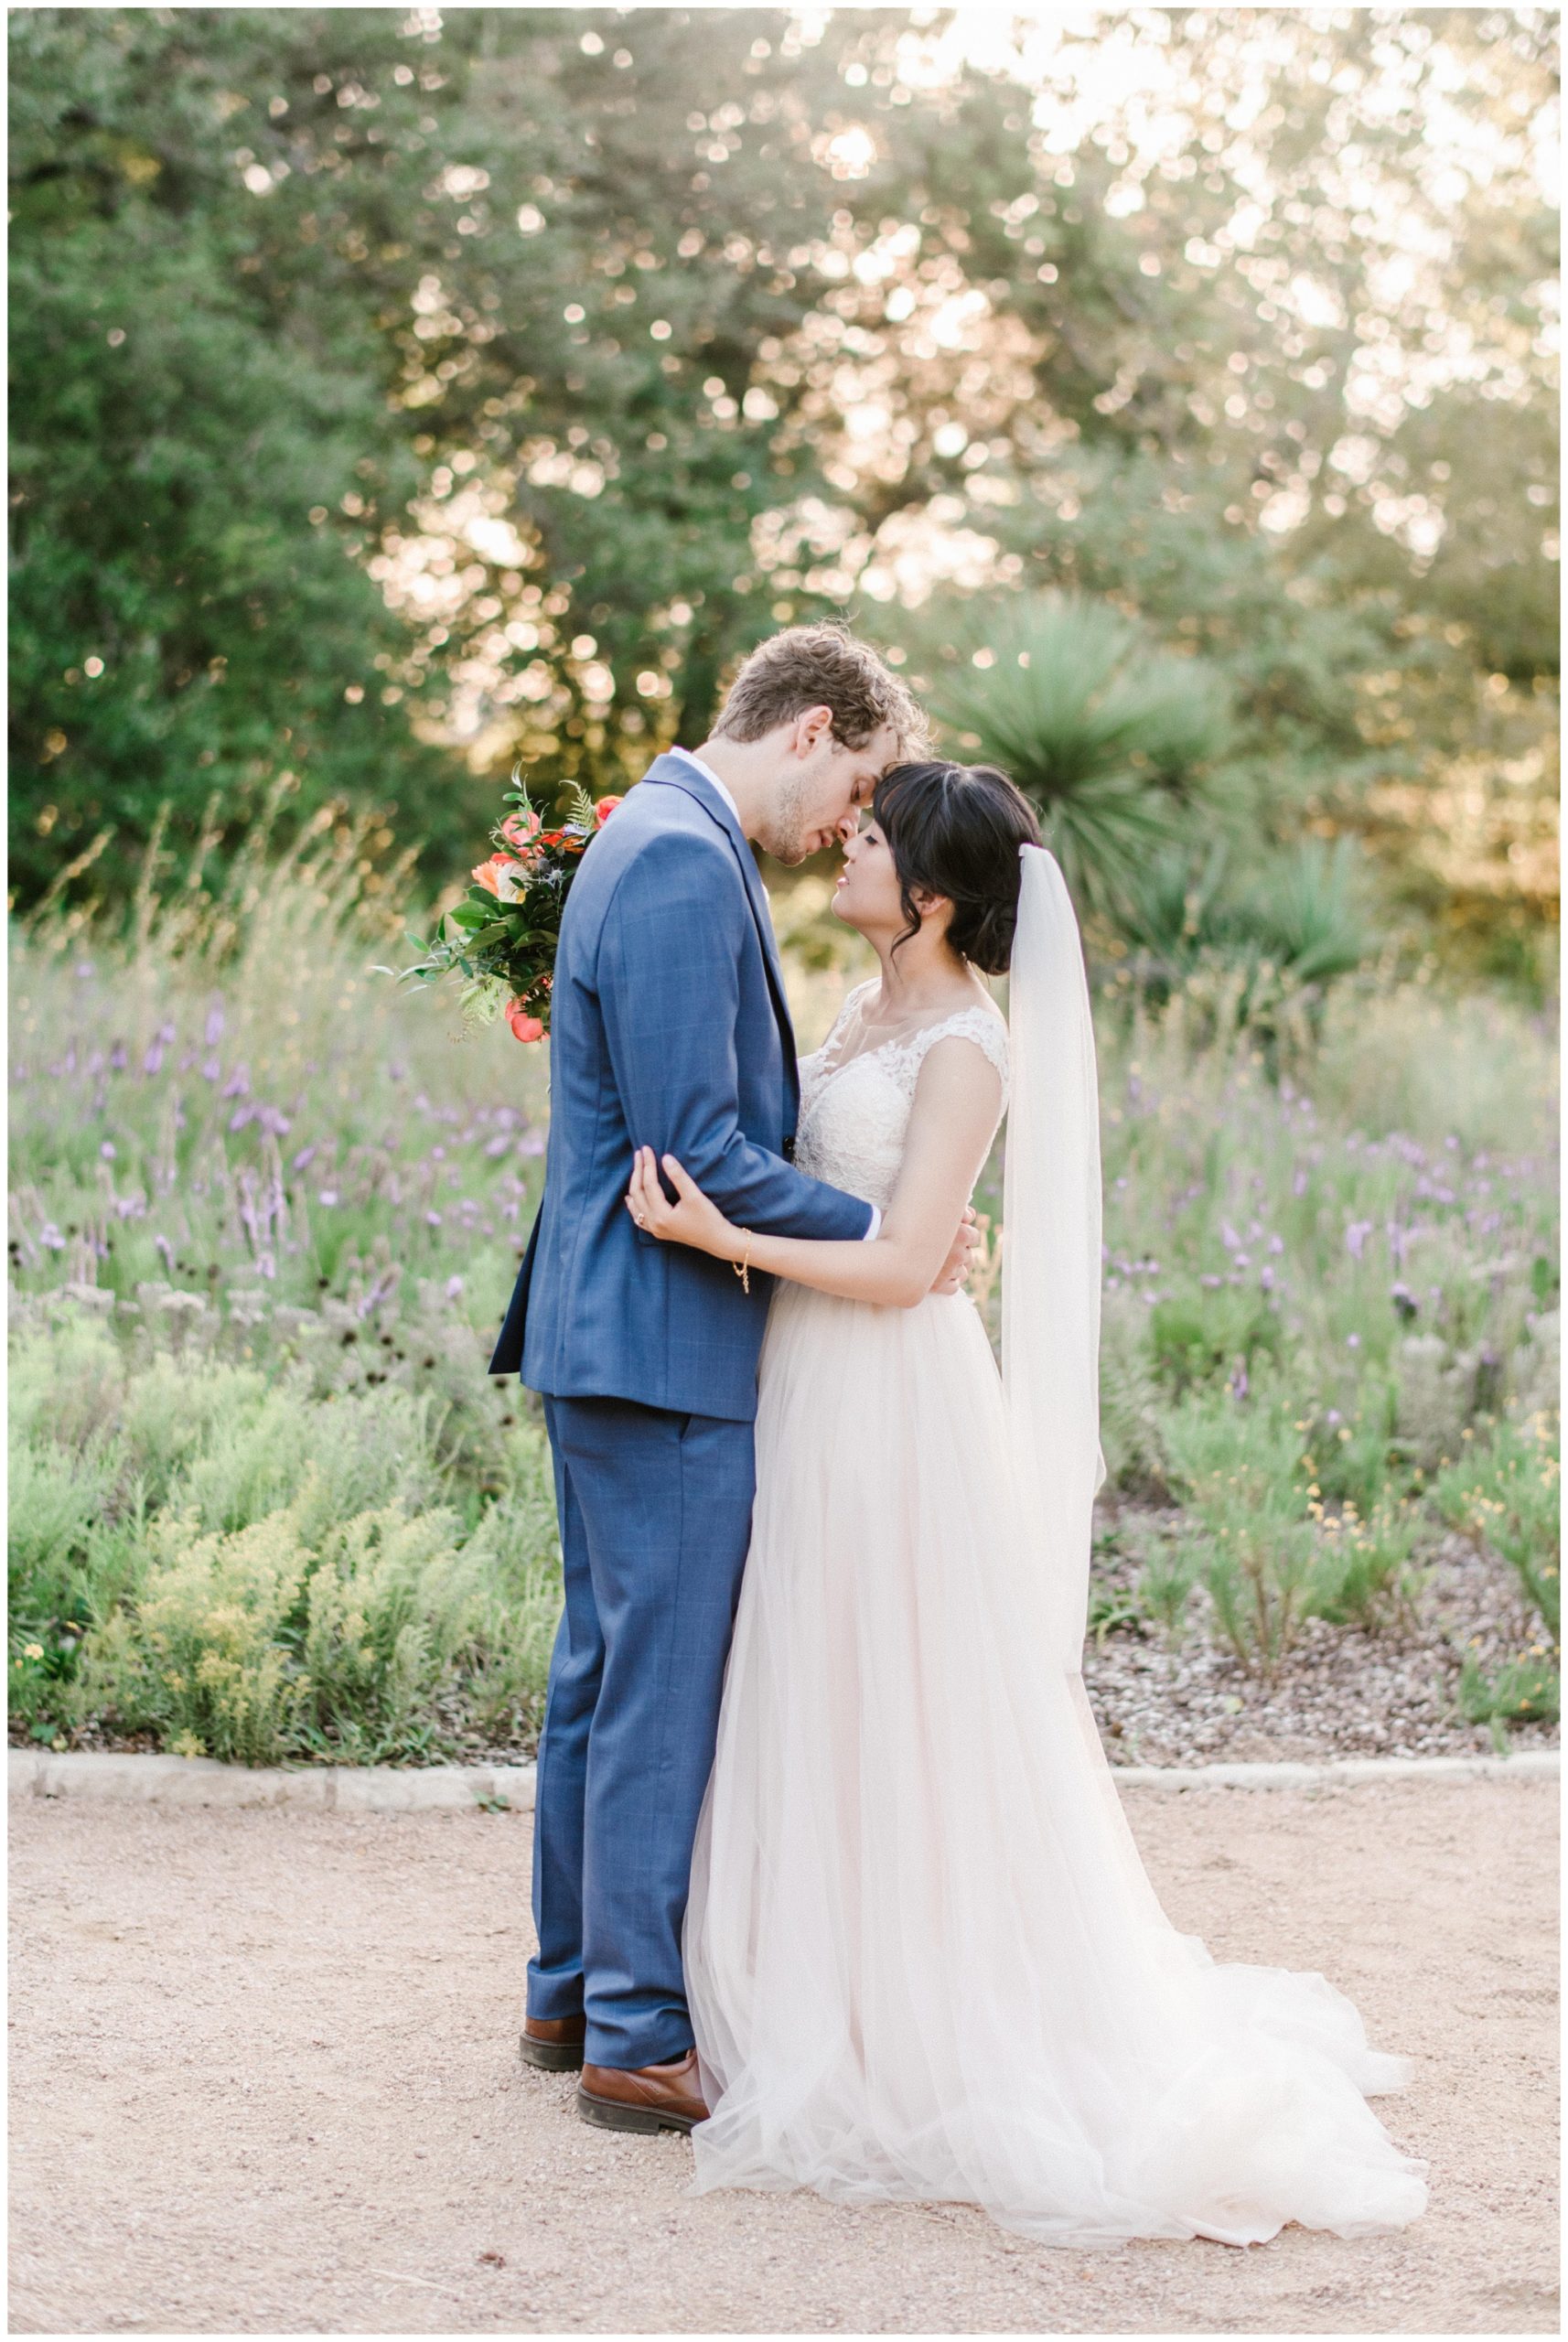 Outdoor newlywed photo inspiration, Austin Texas, Joslyn Holtfort Photography